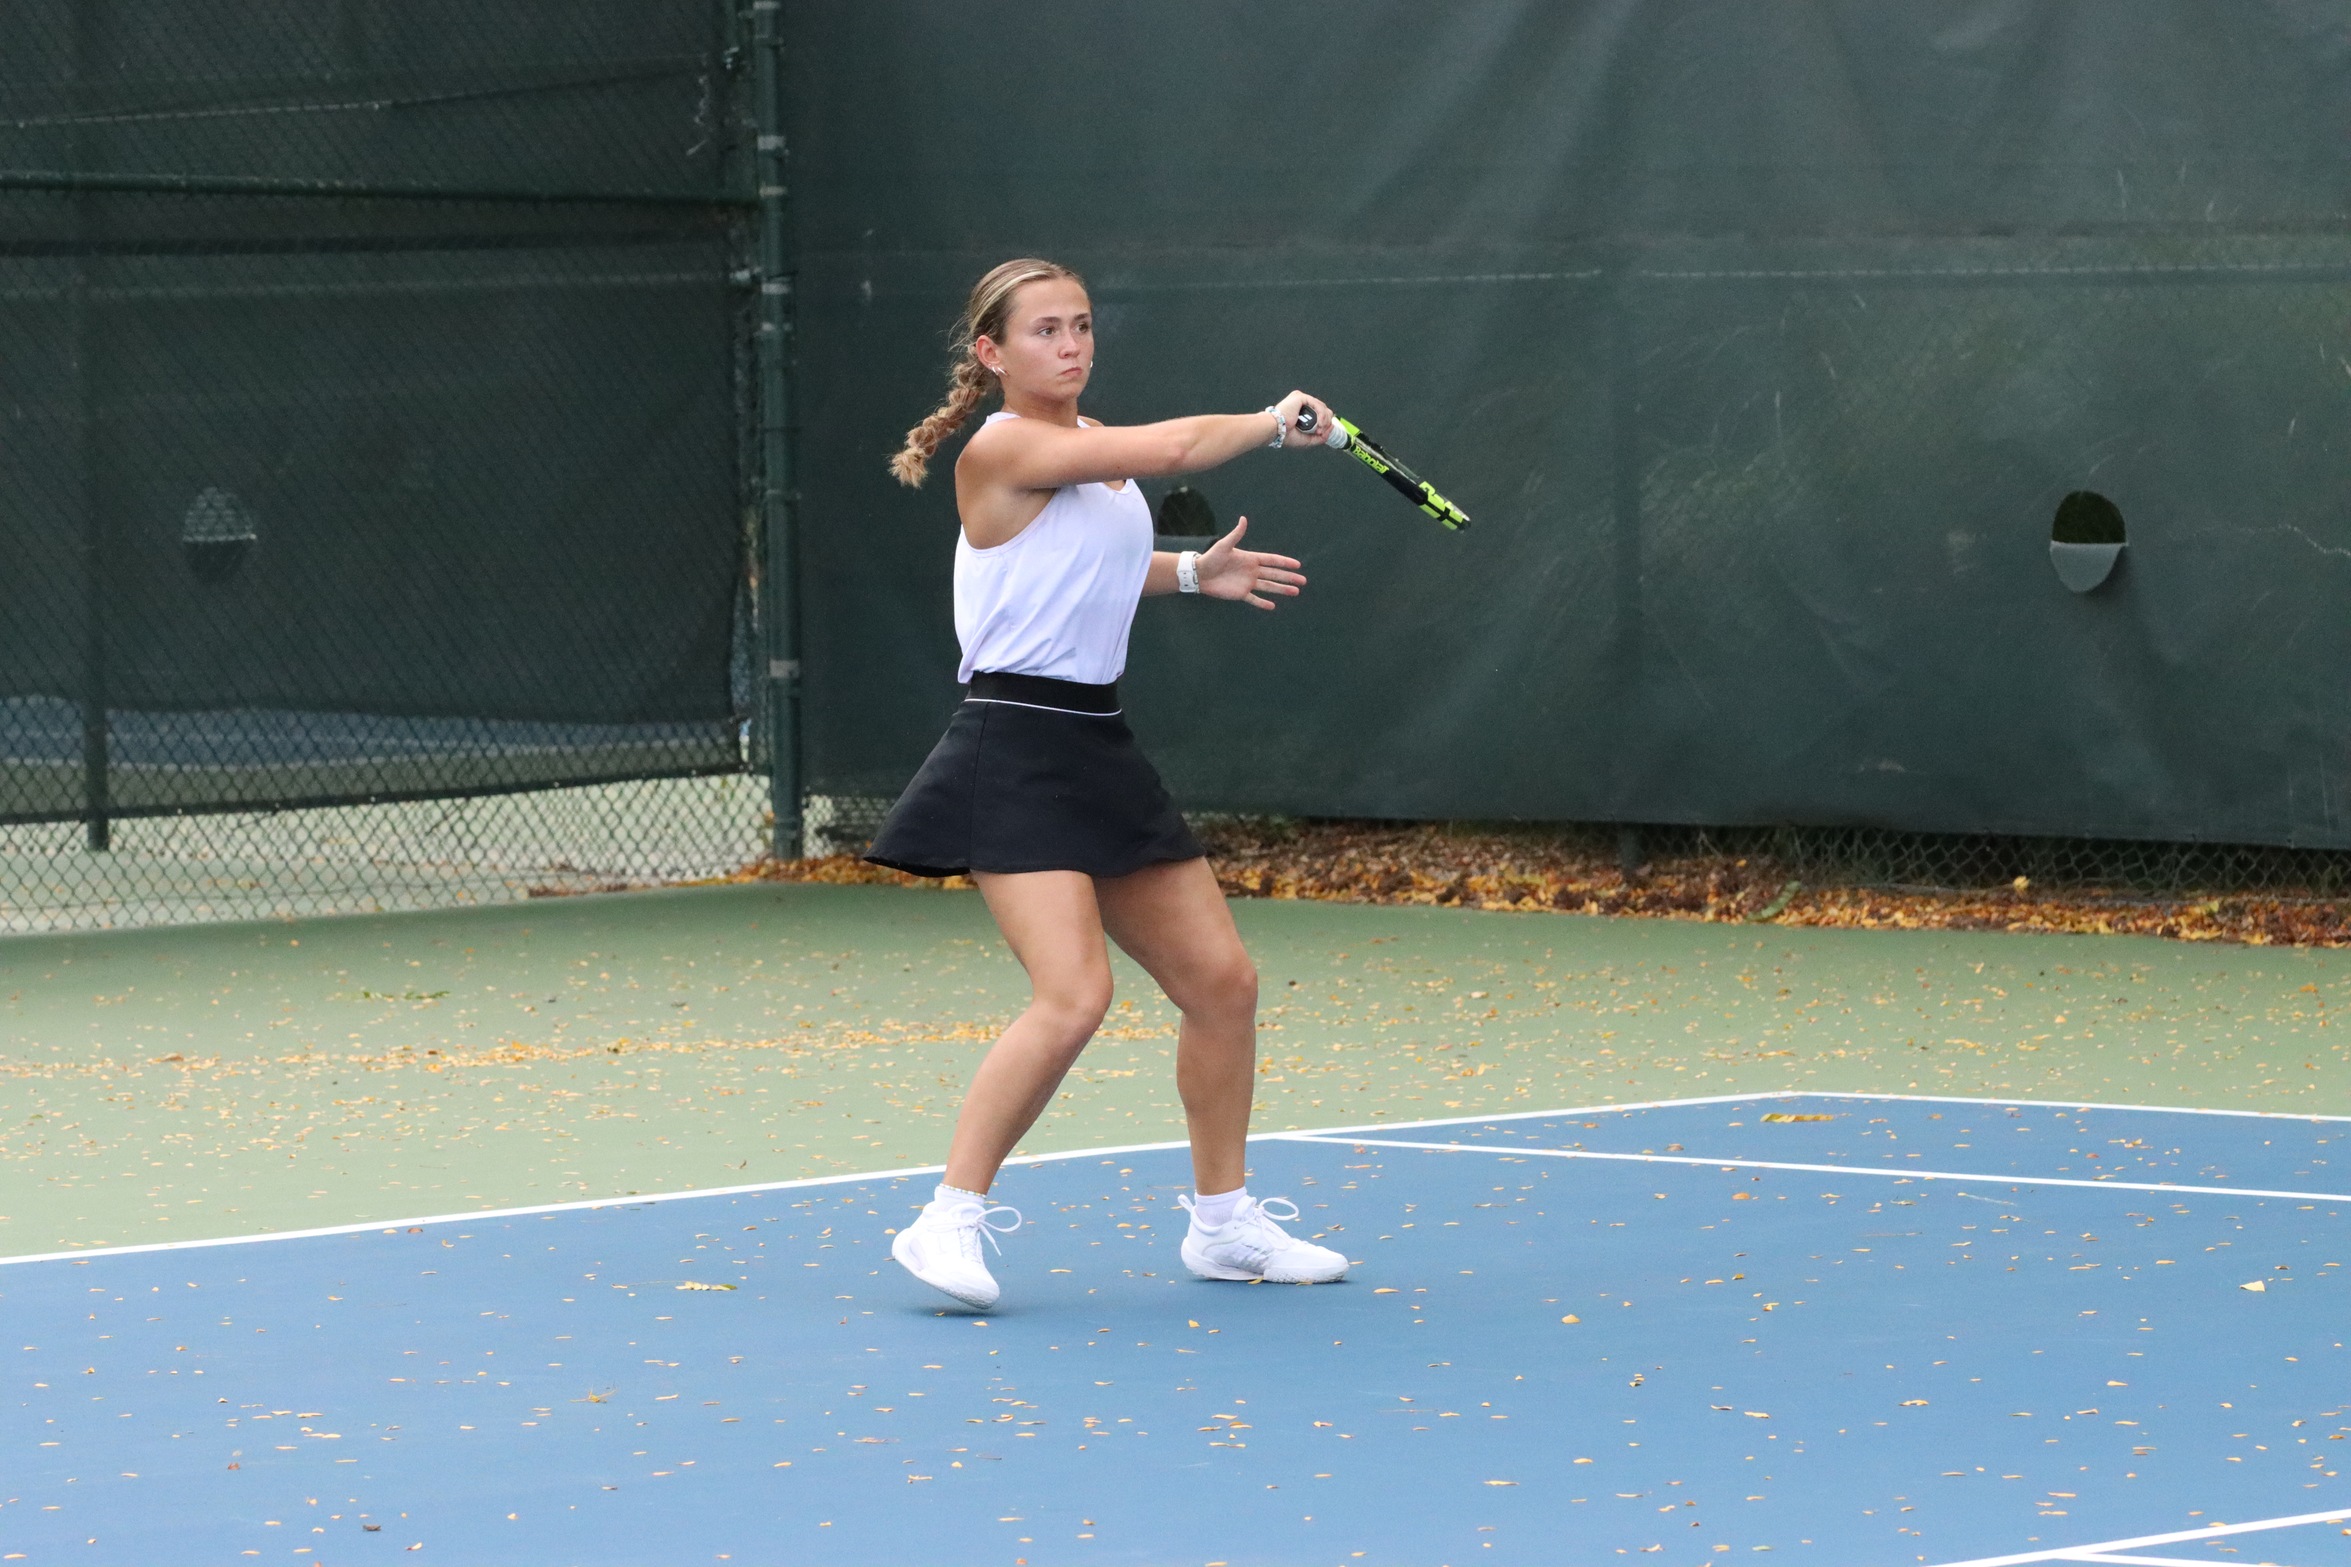 Women's Tennis opens spring season at Saint Mary's